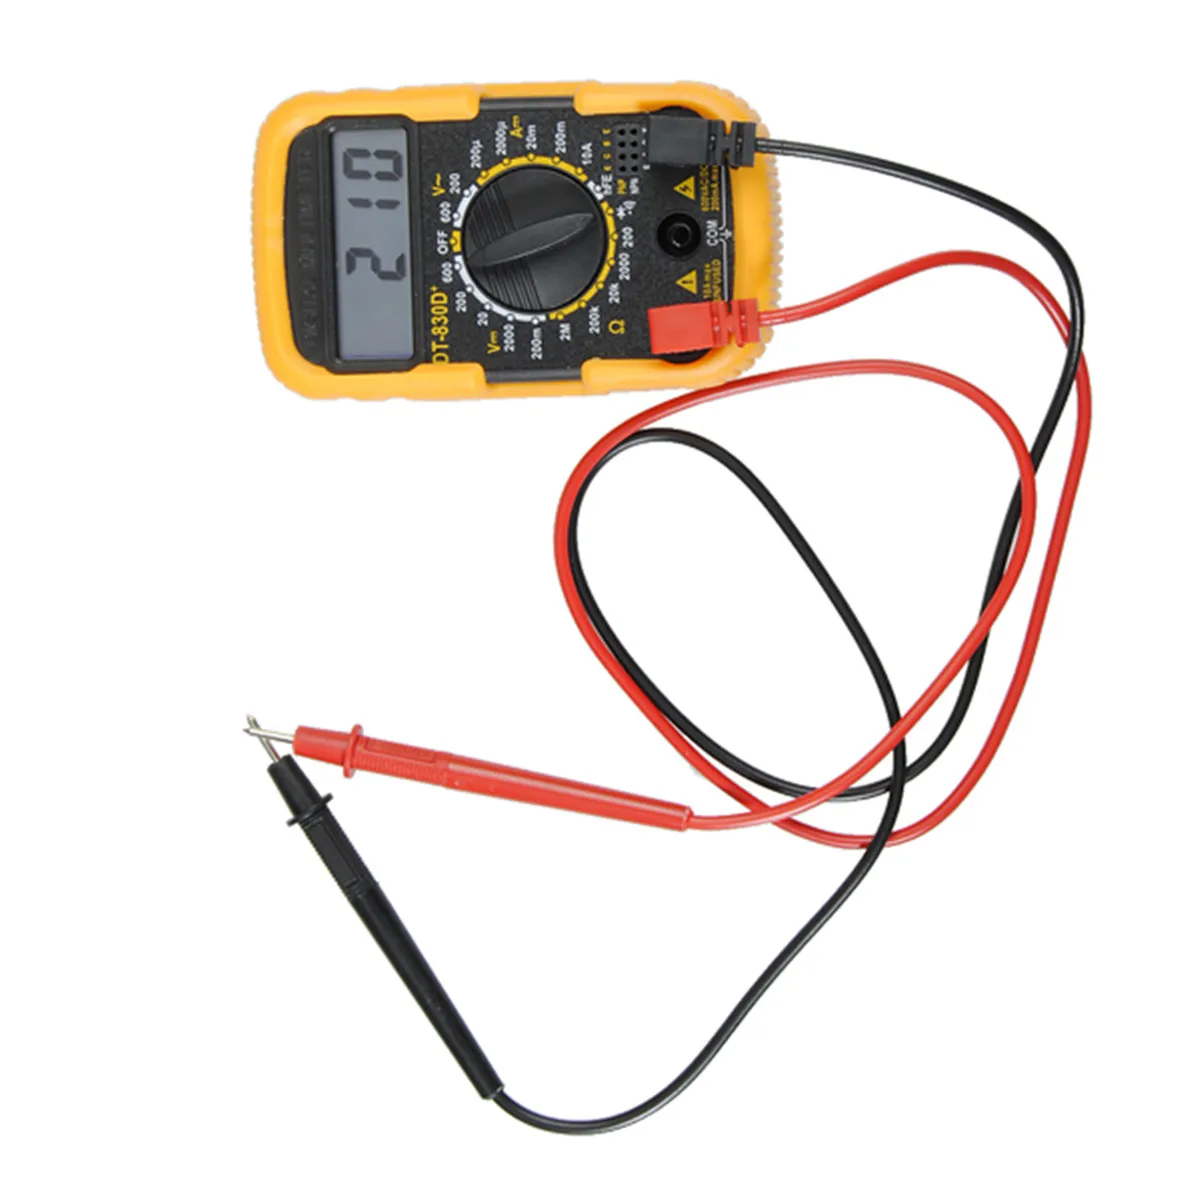 

Portable DT-830D+ Mini 2 inch LCD Digital Multimeter Orange & Black With Test Leads & Battery